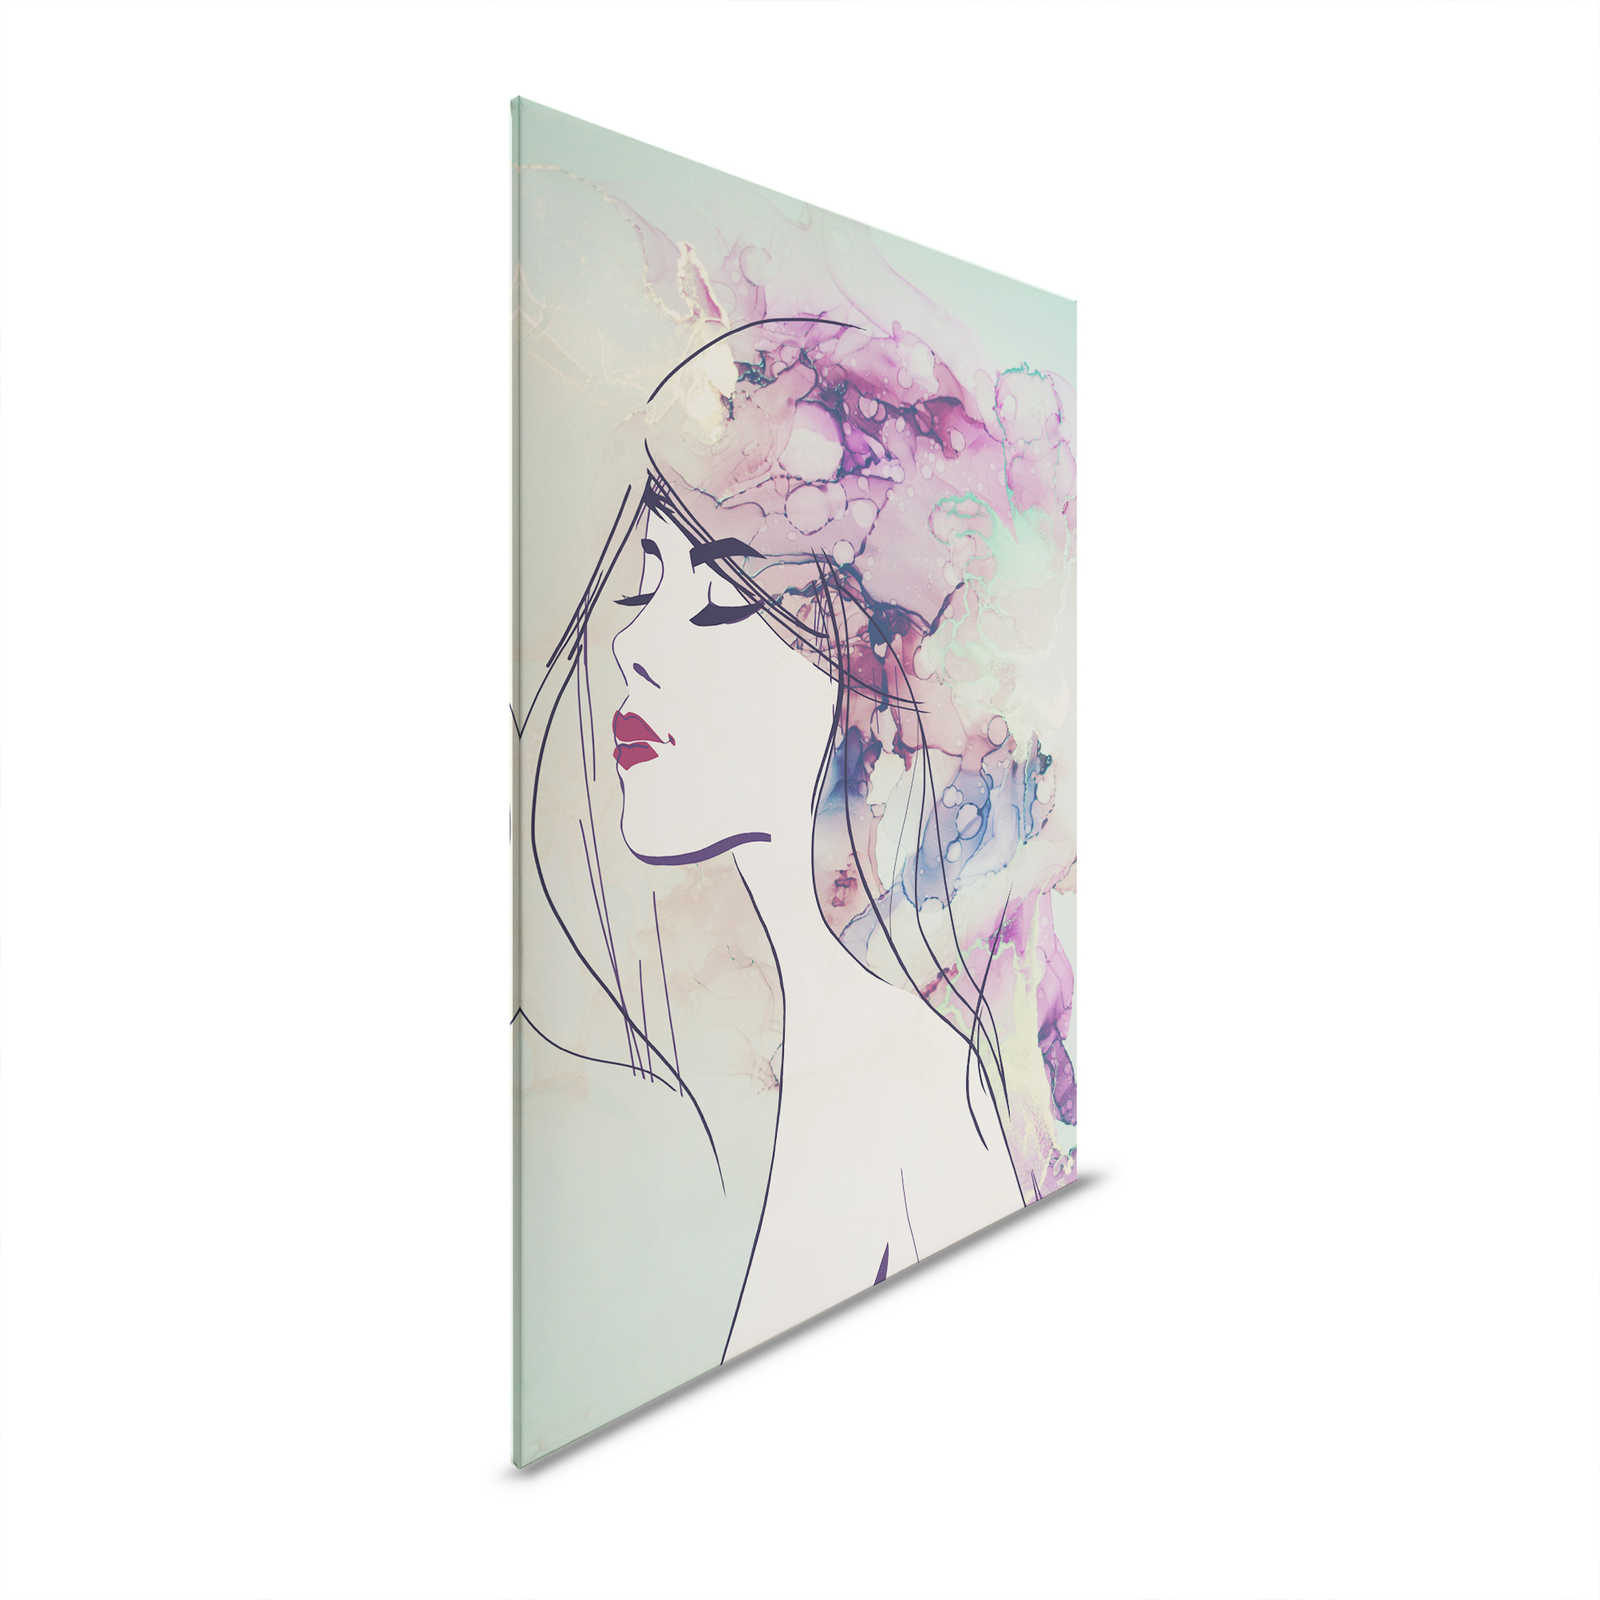         Acryl Design Leinwandbild Frauengesicht in Türkis & Violett – 1,20 m x 0,80 m
    